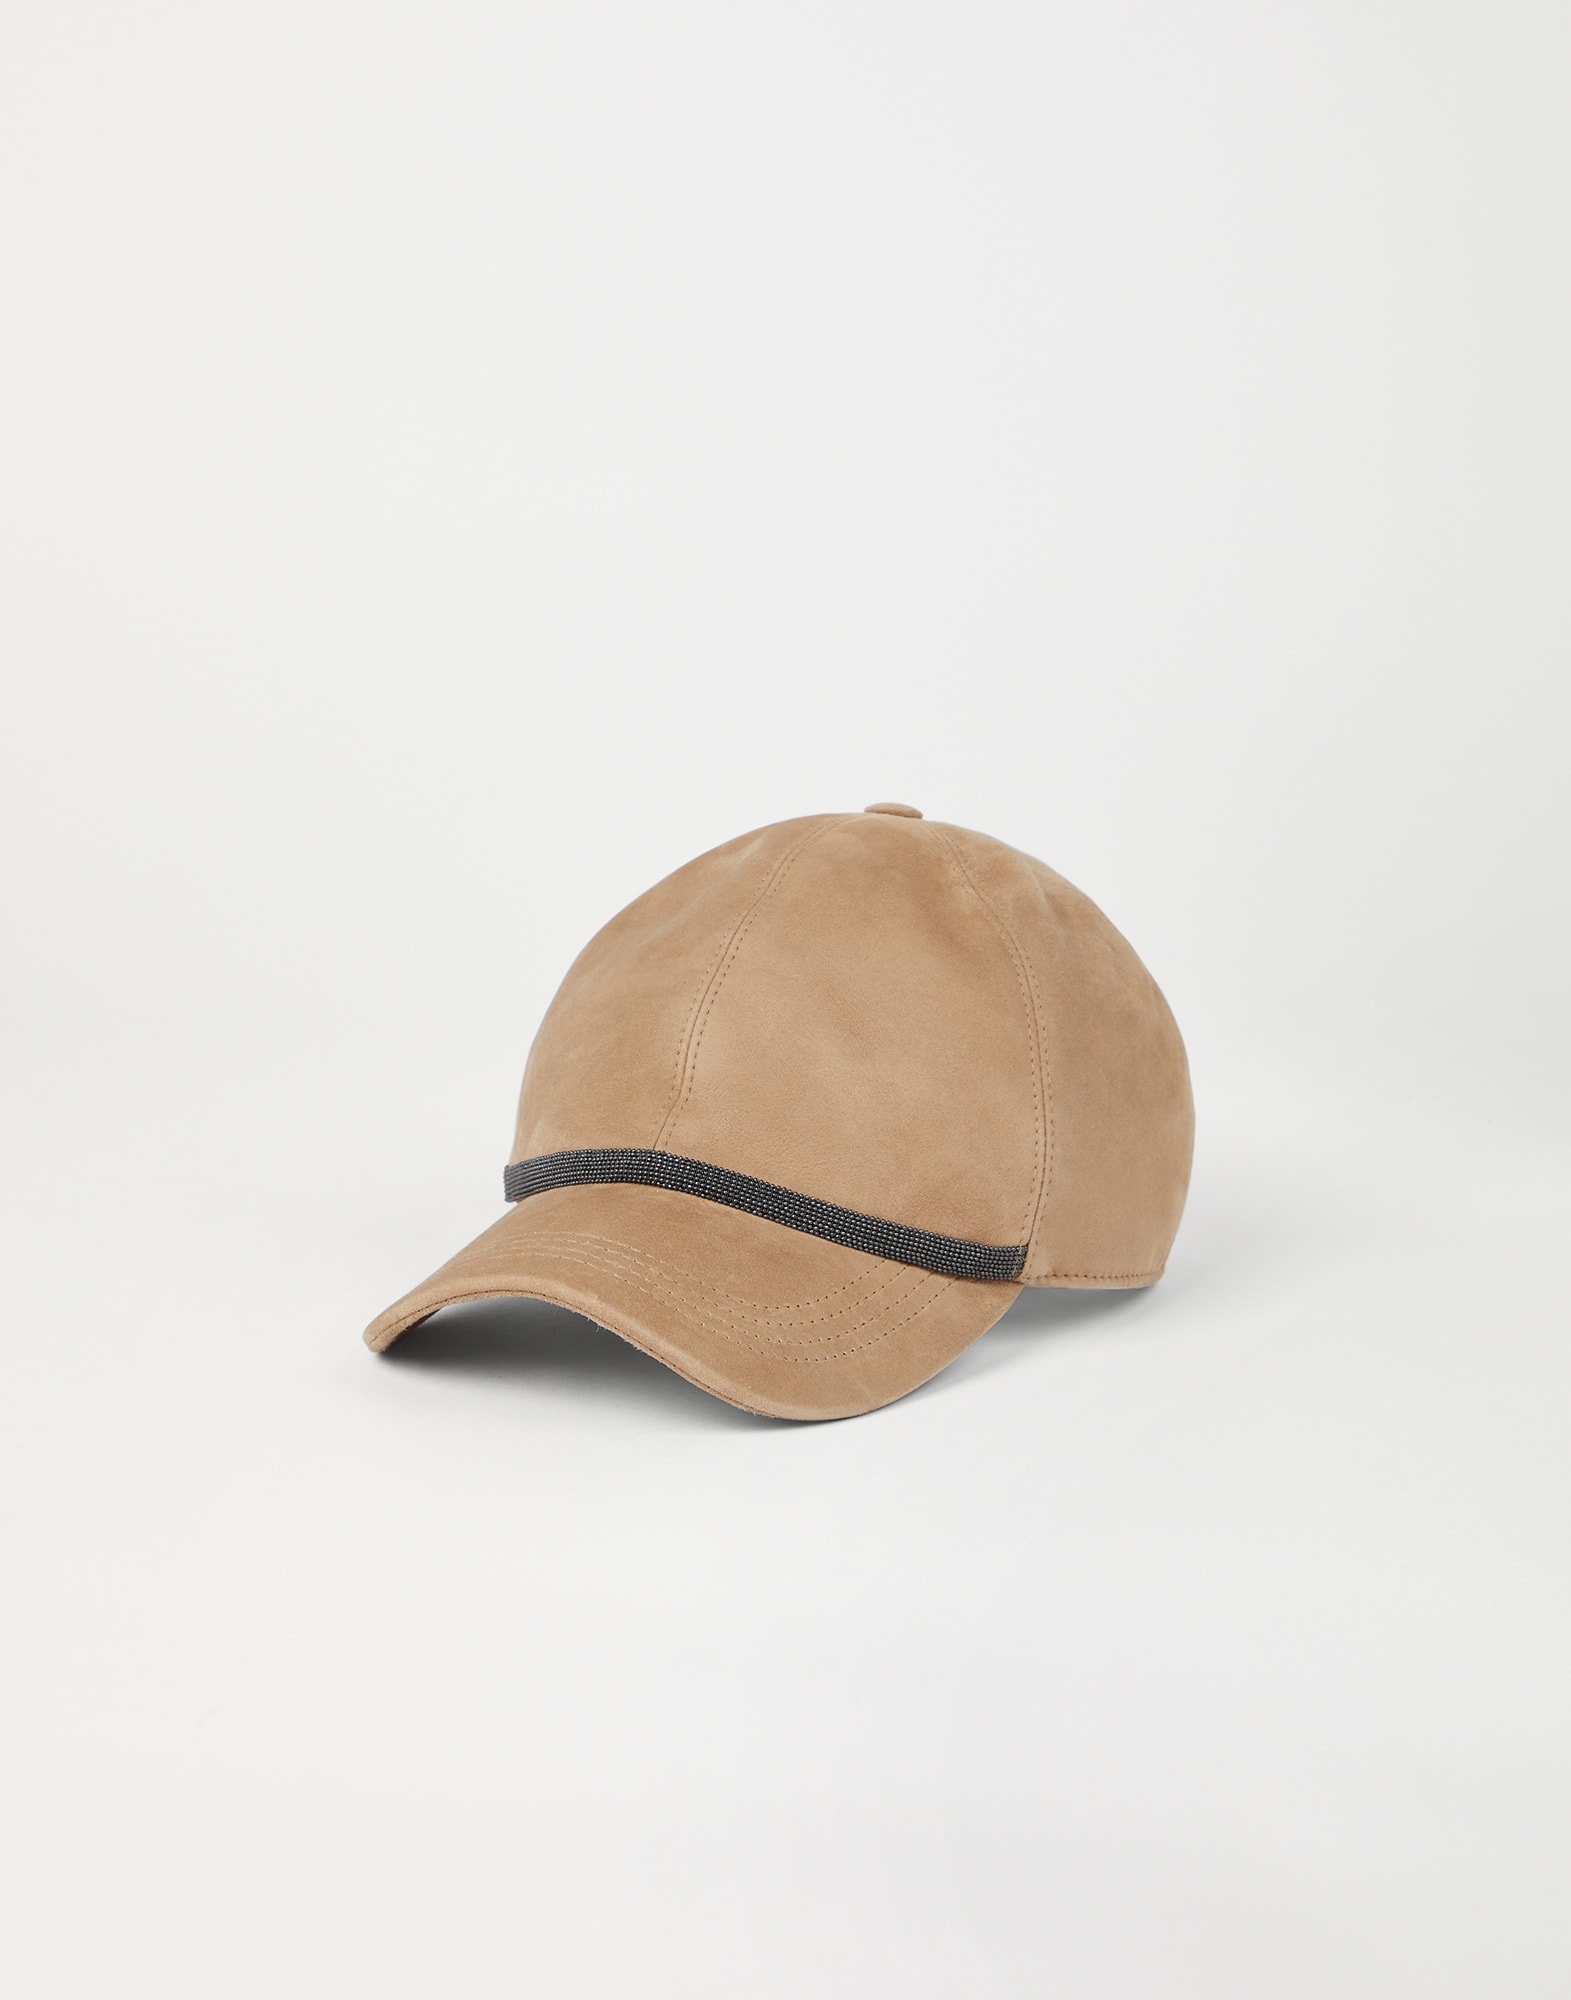 Suede baseball cap with shiny trim - 1